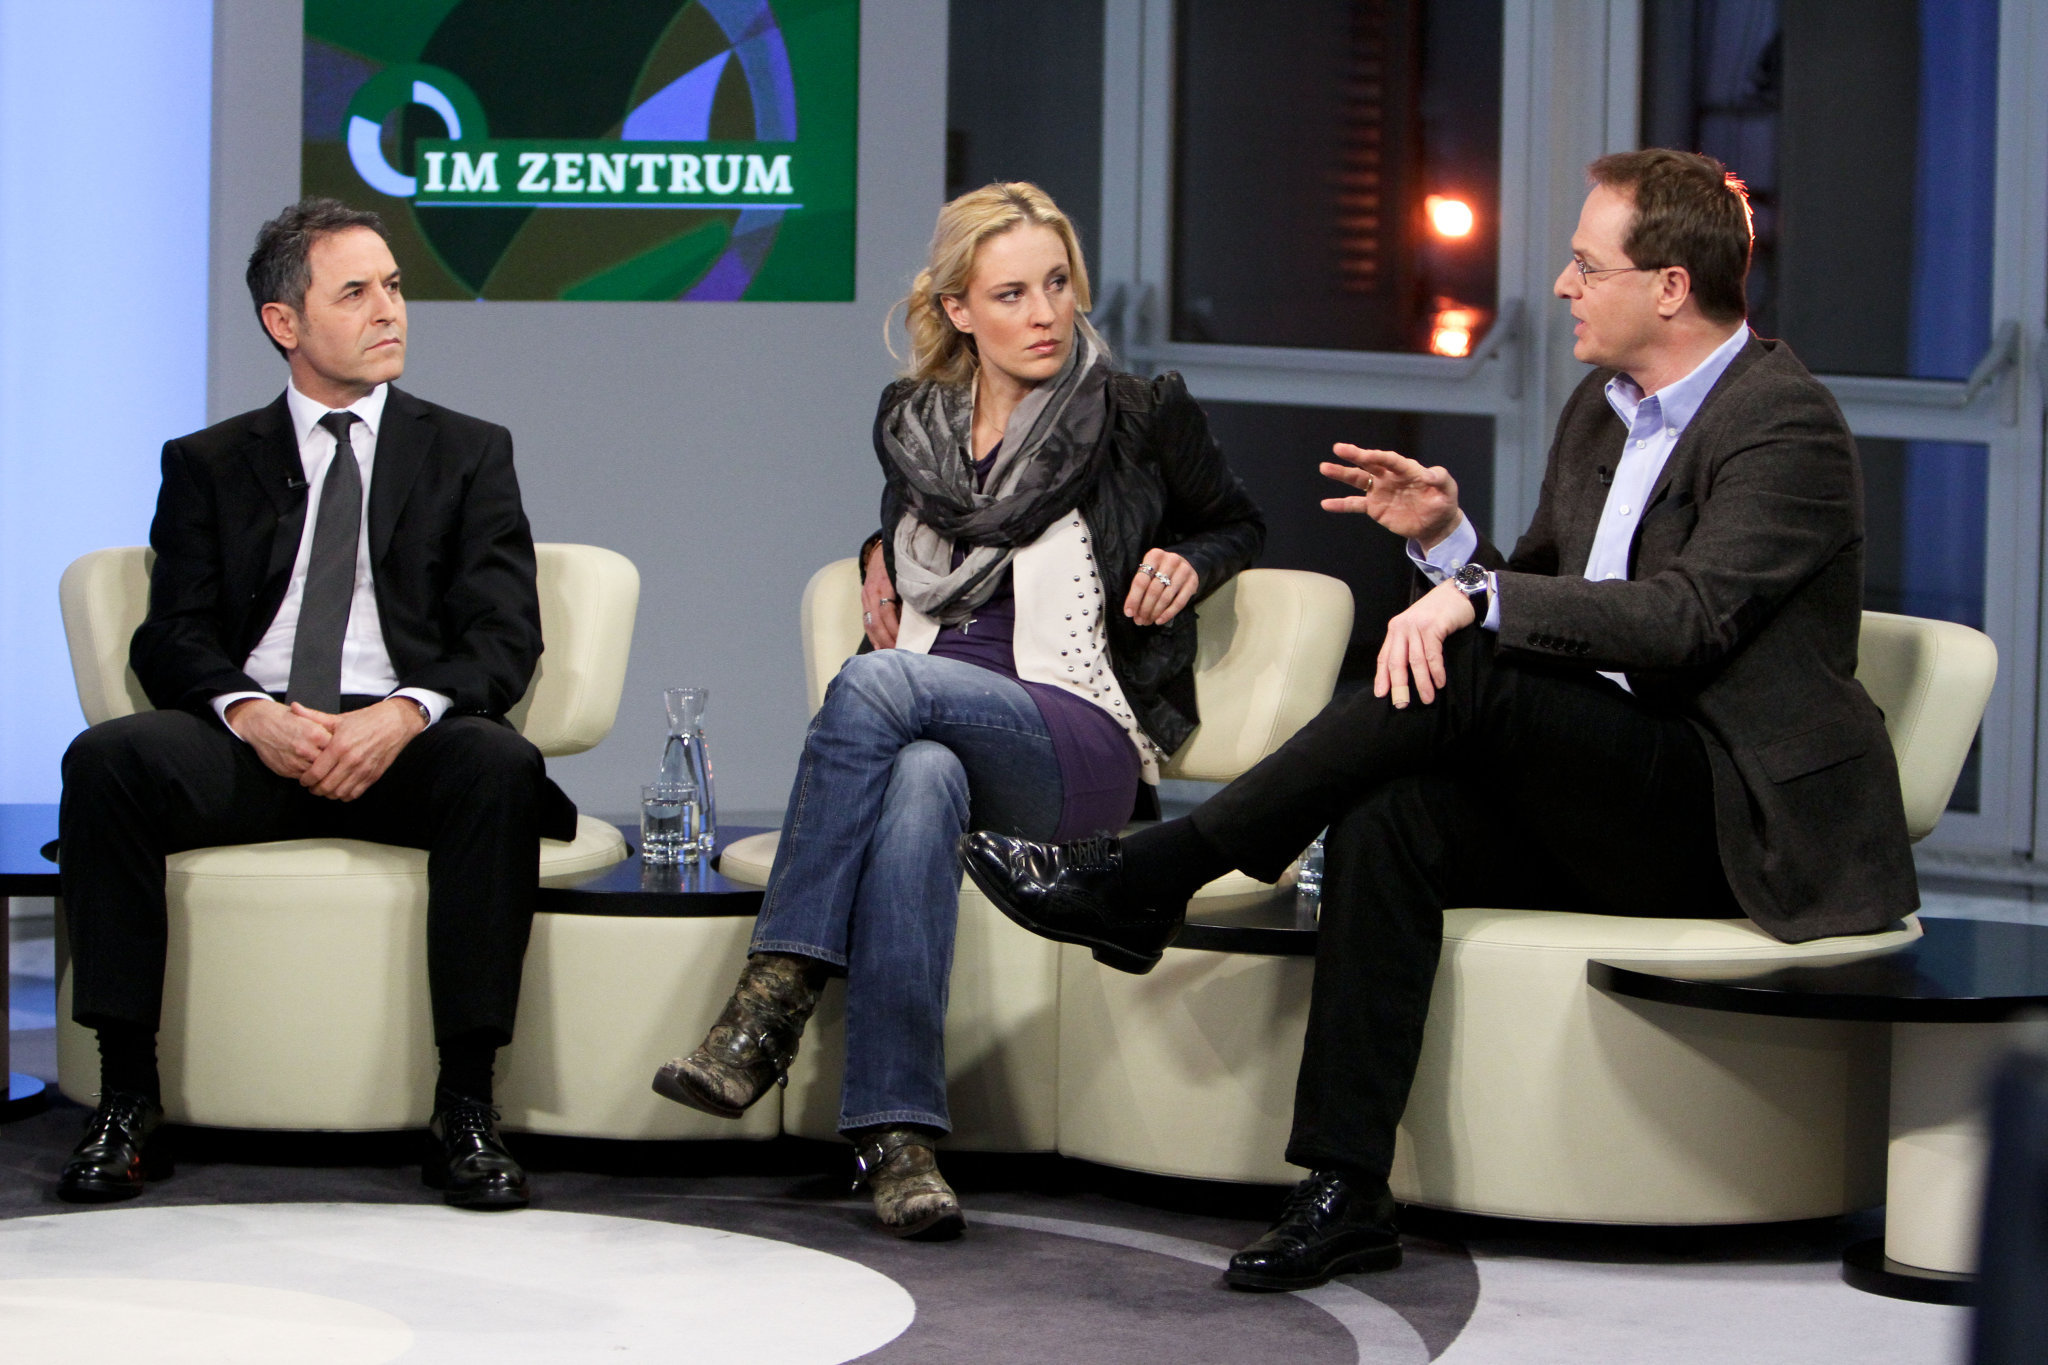 lilian klebow, studio guest, politics talk live austrian broadcasting company, ORF dec 2011